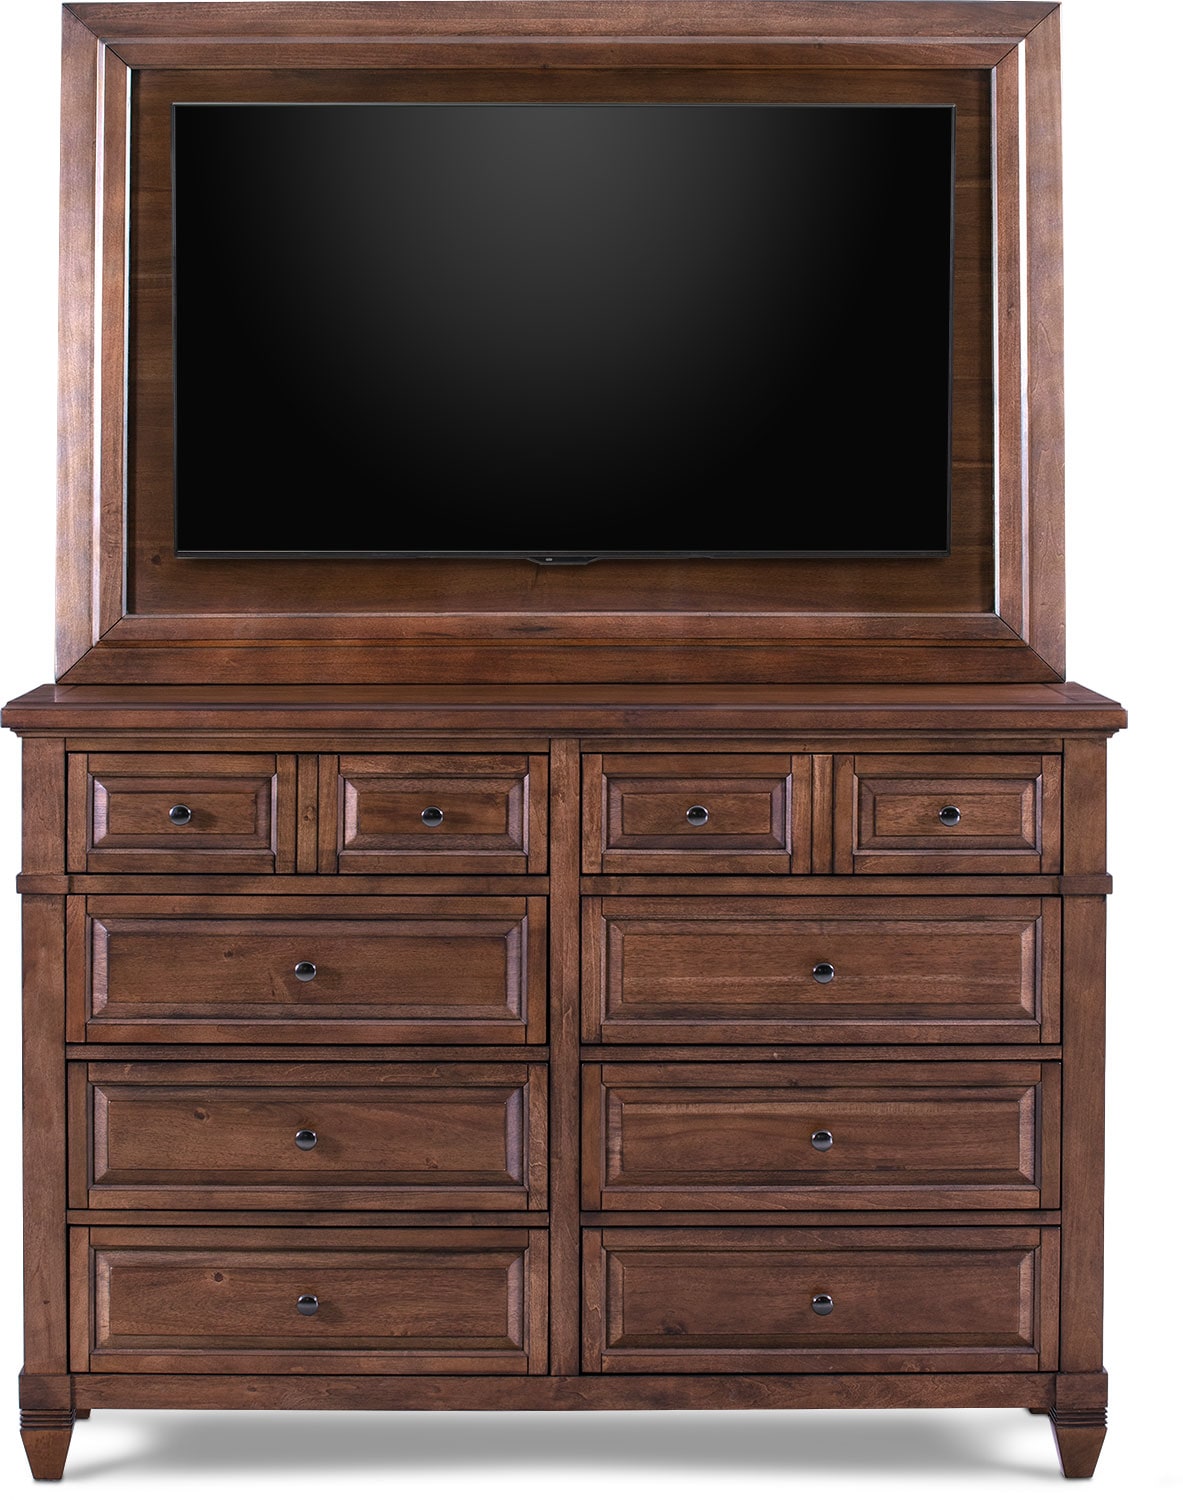 Rosalie Dresser With Tv Mount American Signature Furniture